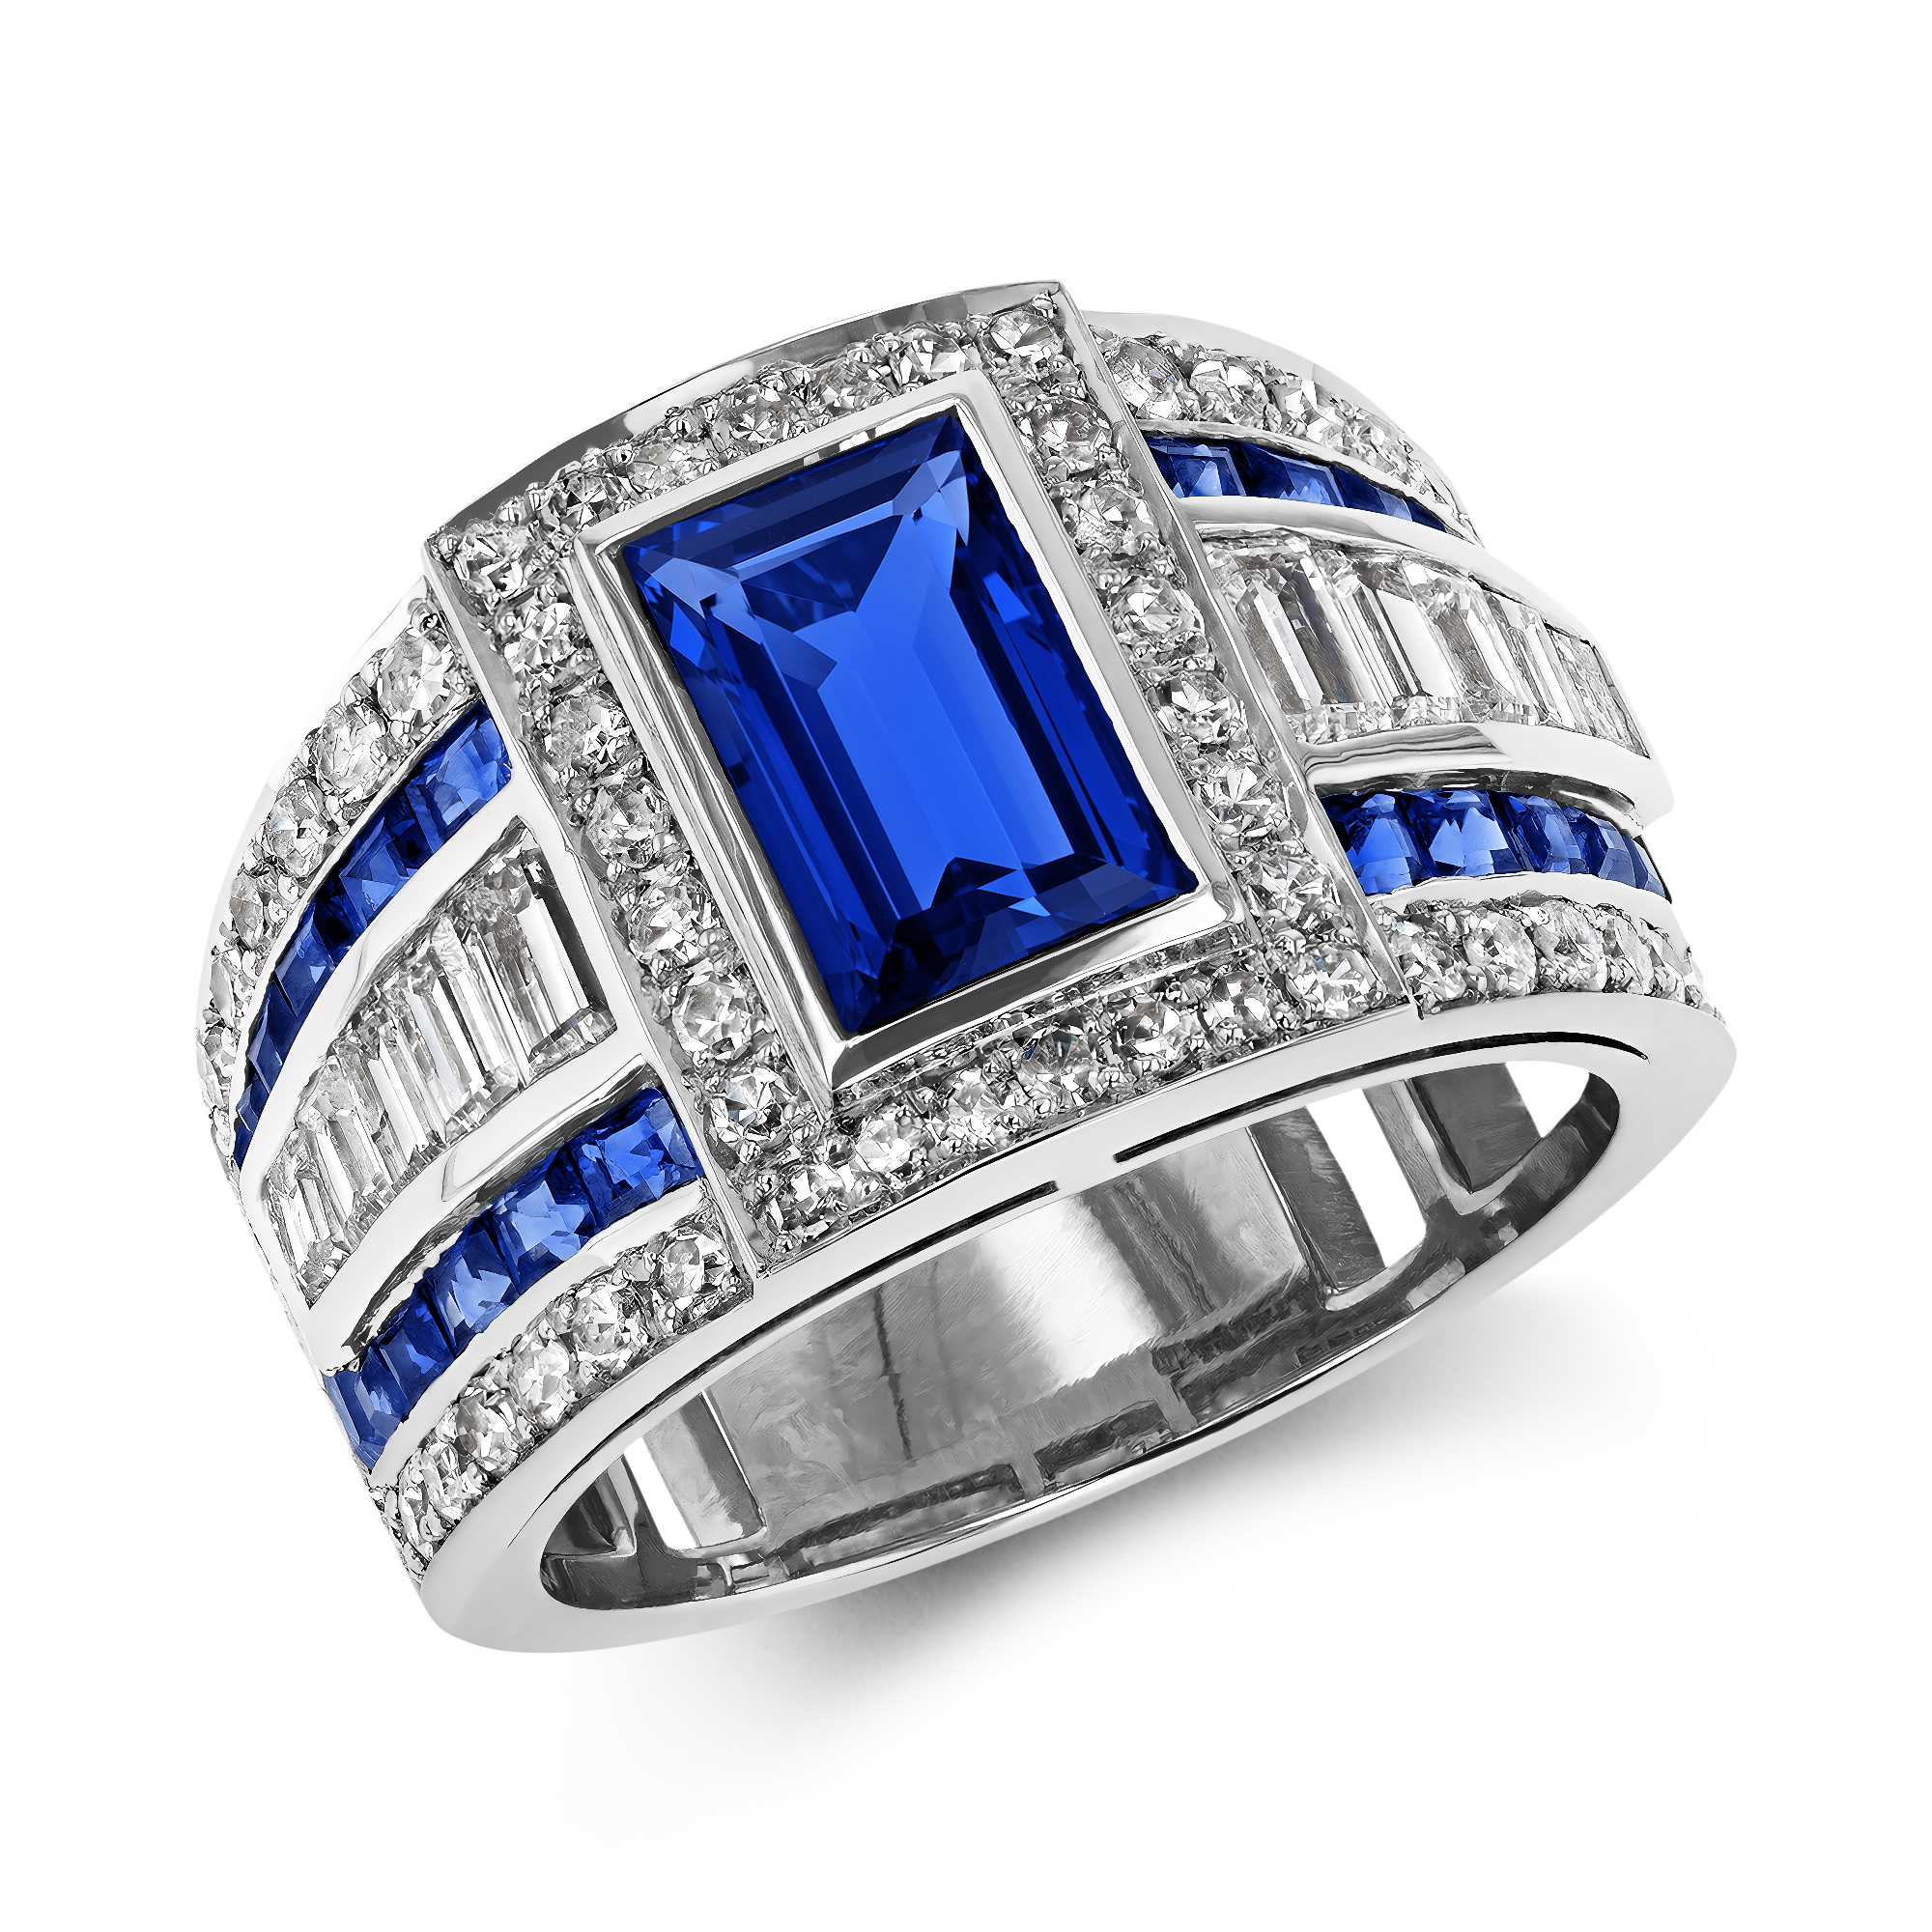 Art Deco Inspired Blue Sapphire Ring Emerald Cut, Rubover Set_1